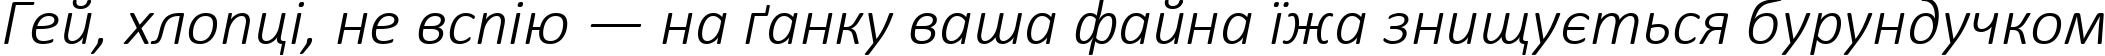 Пример написания шрифтом Calibri Light Italic текста на украинском